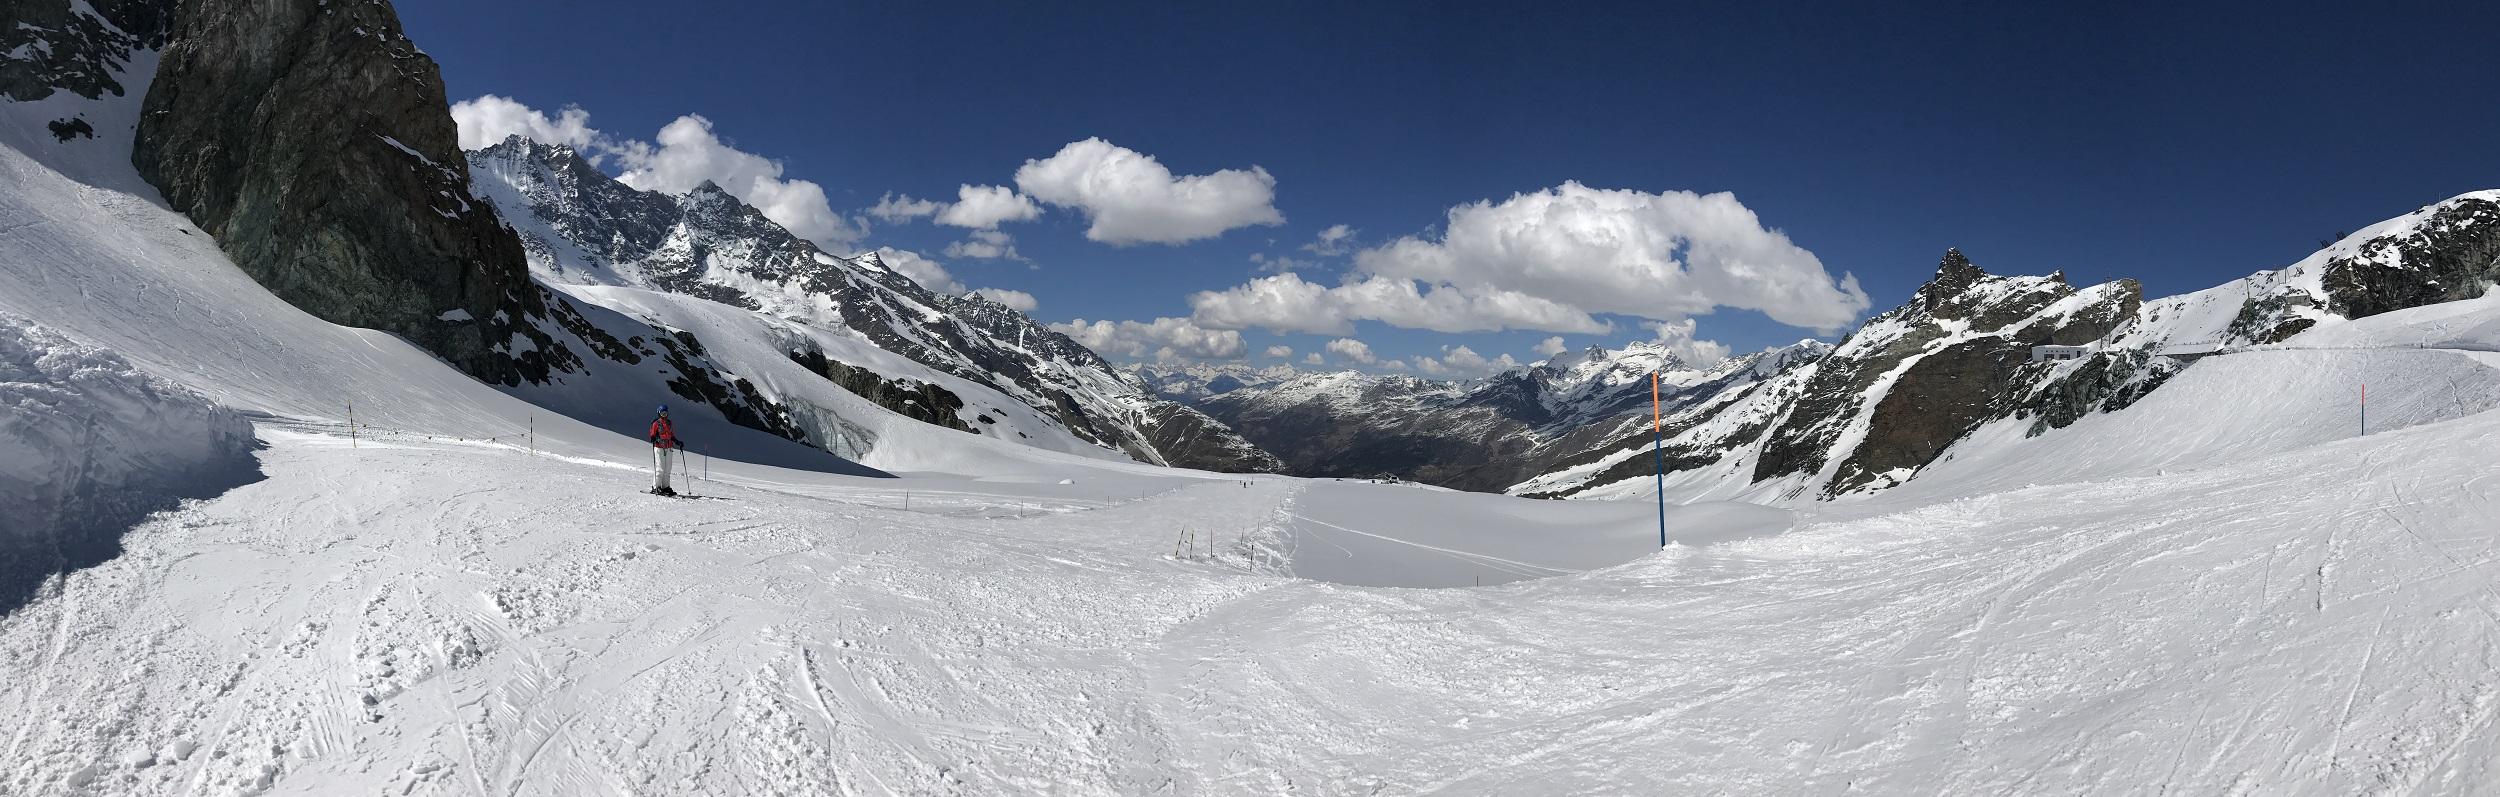 zwitserland-saas-fee-skigebied